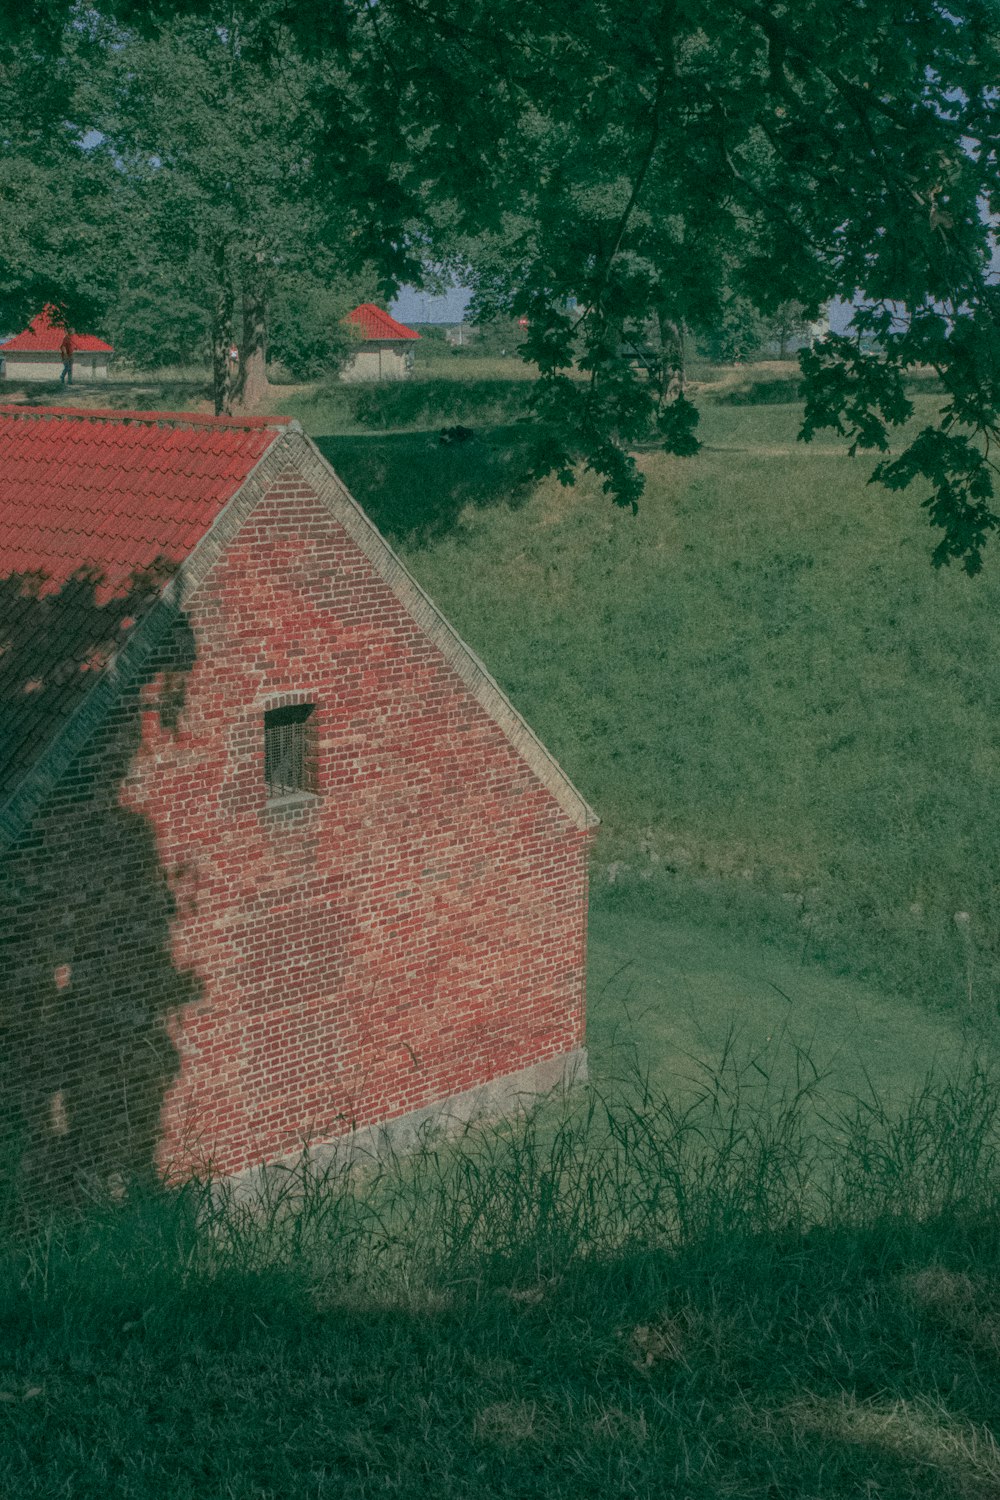 a brick building in a grassy field